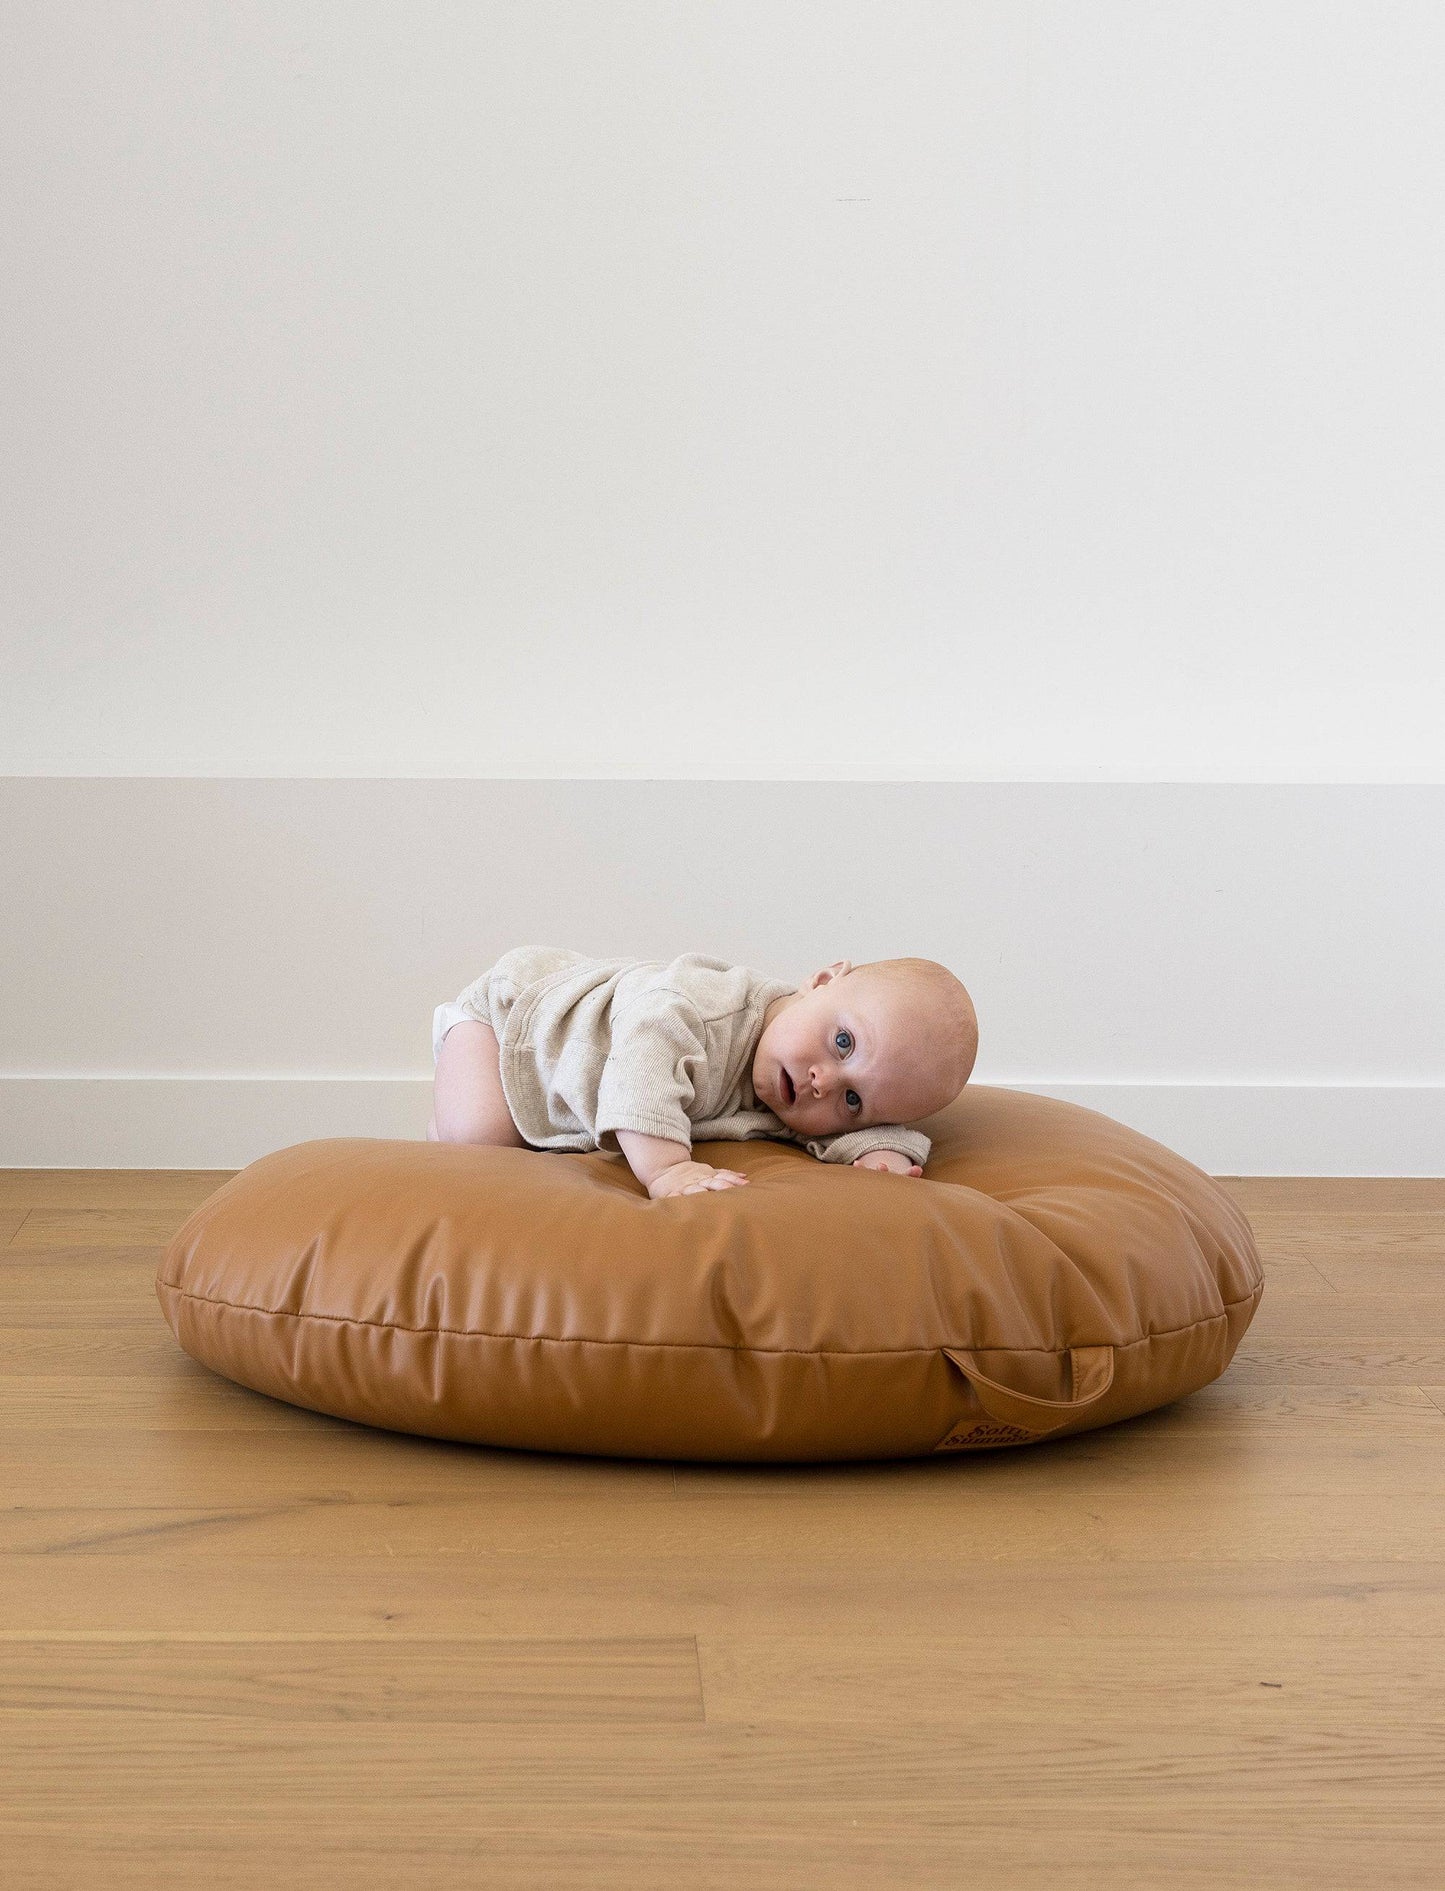 children's beanbag chair floor cushion, baby beanbag